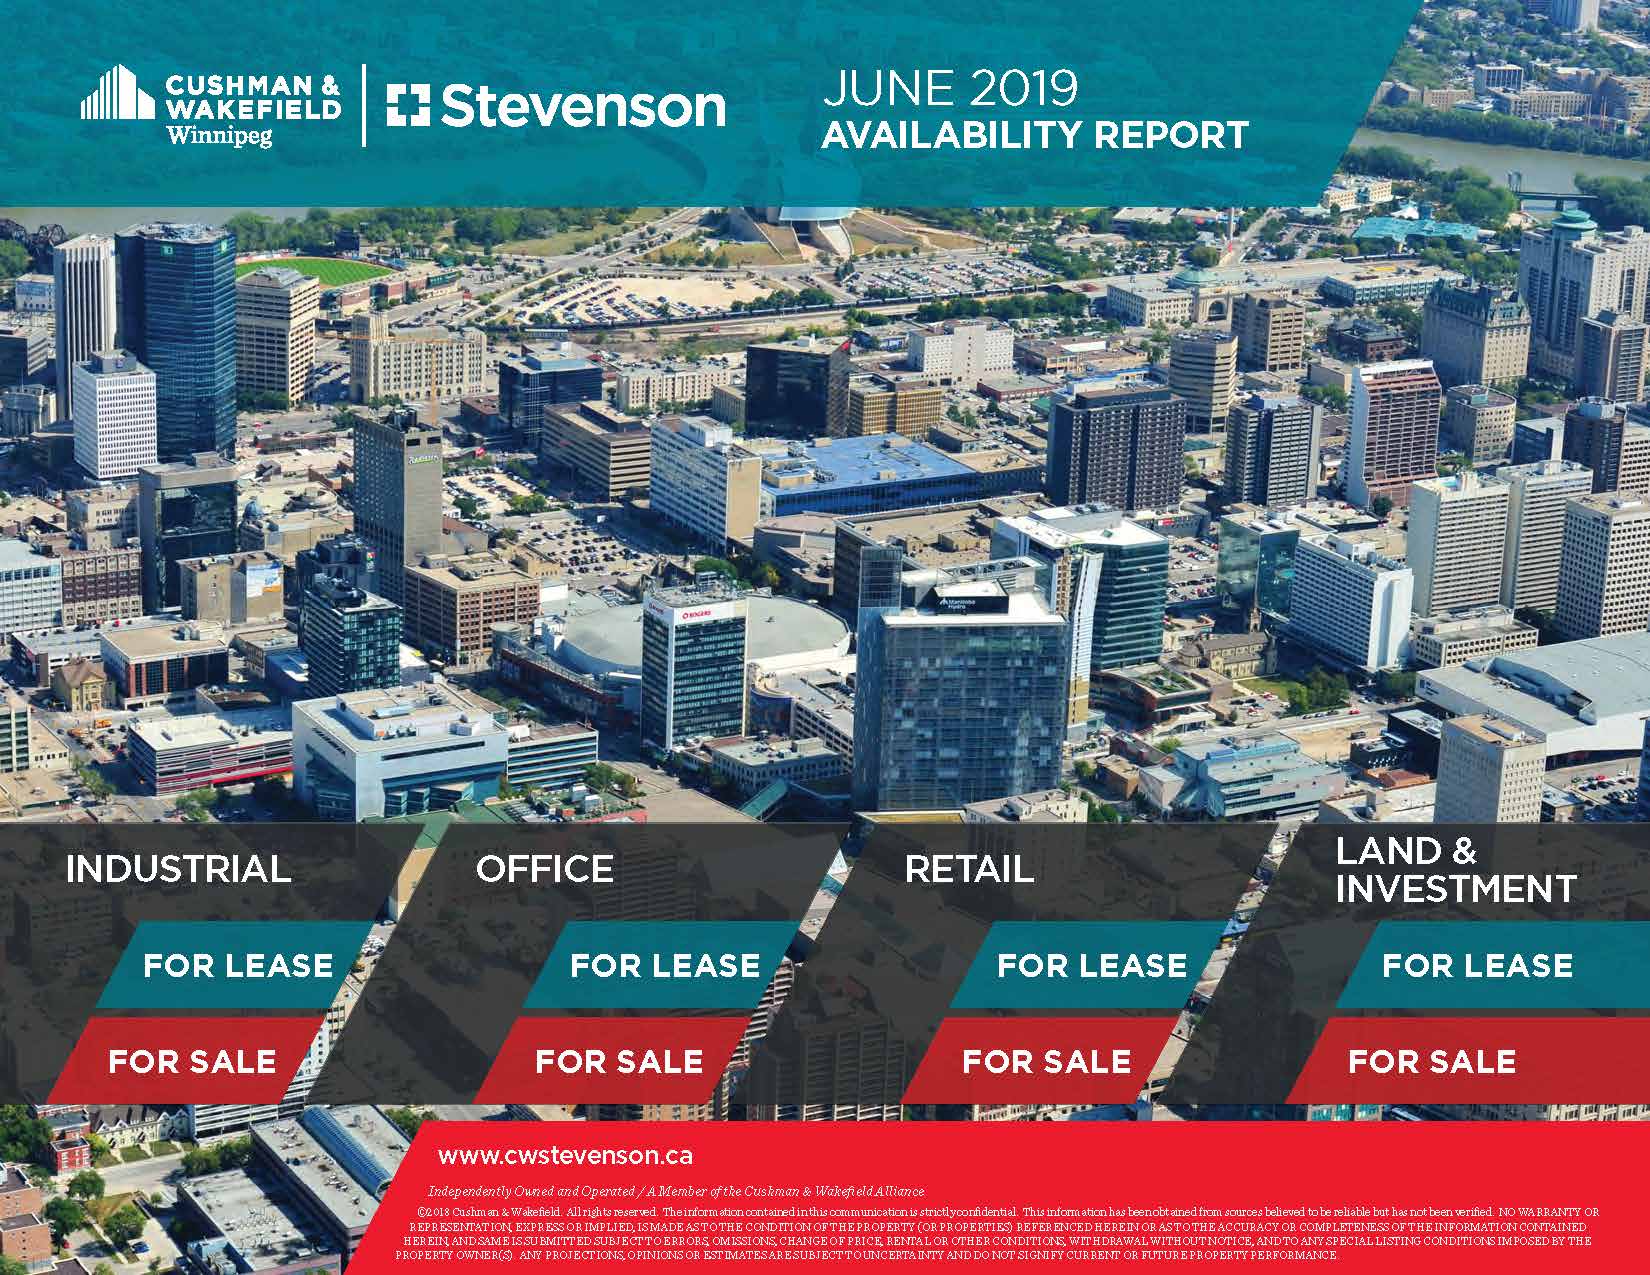 June 2019 property availability report in winnipeg, cws cushman wakefield Stevenson